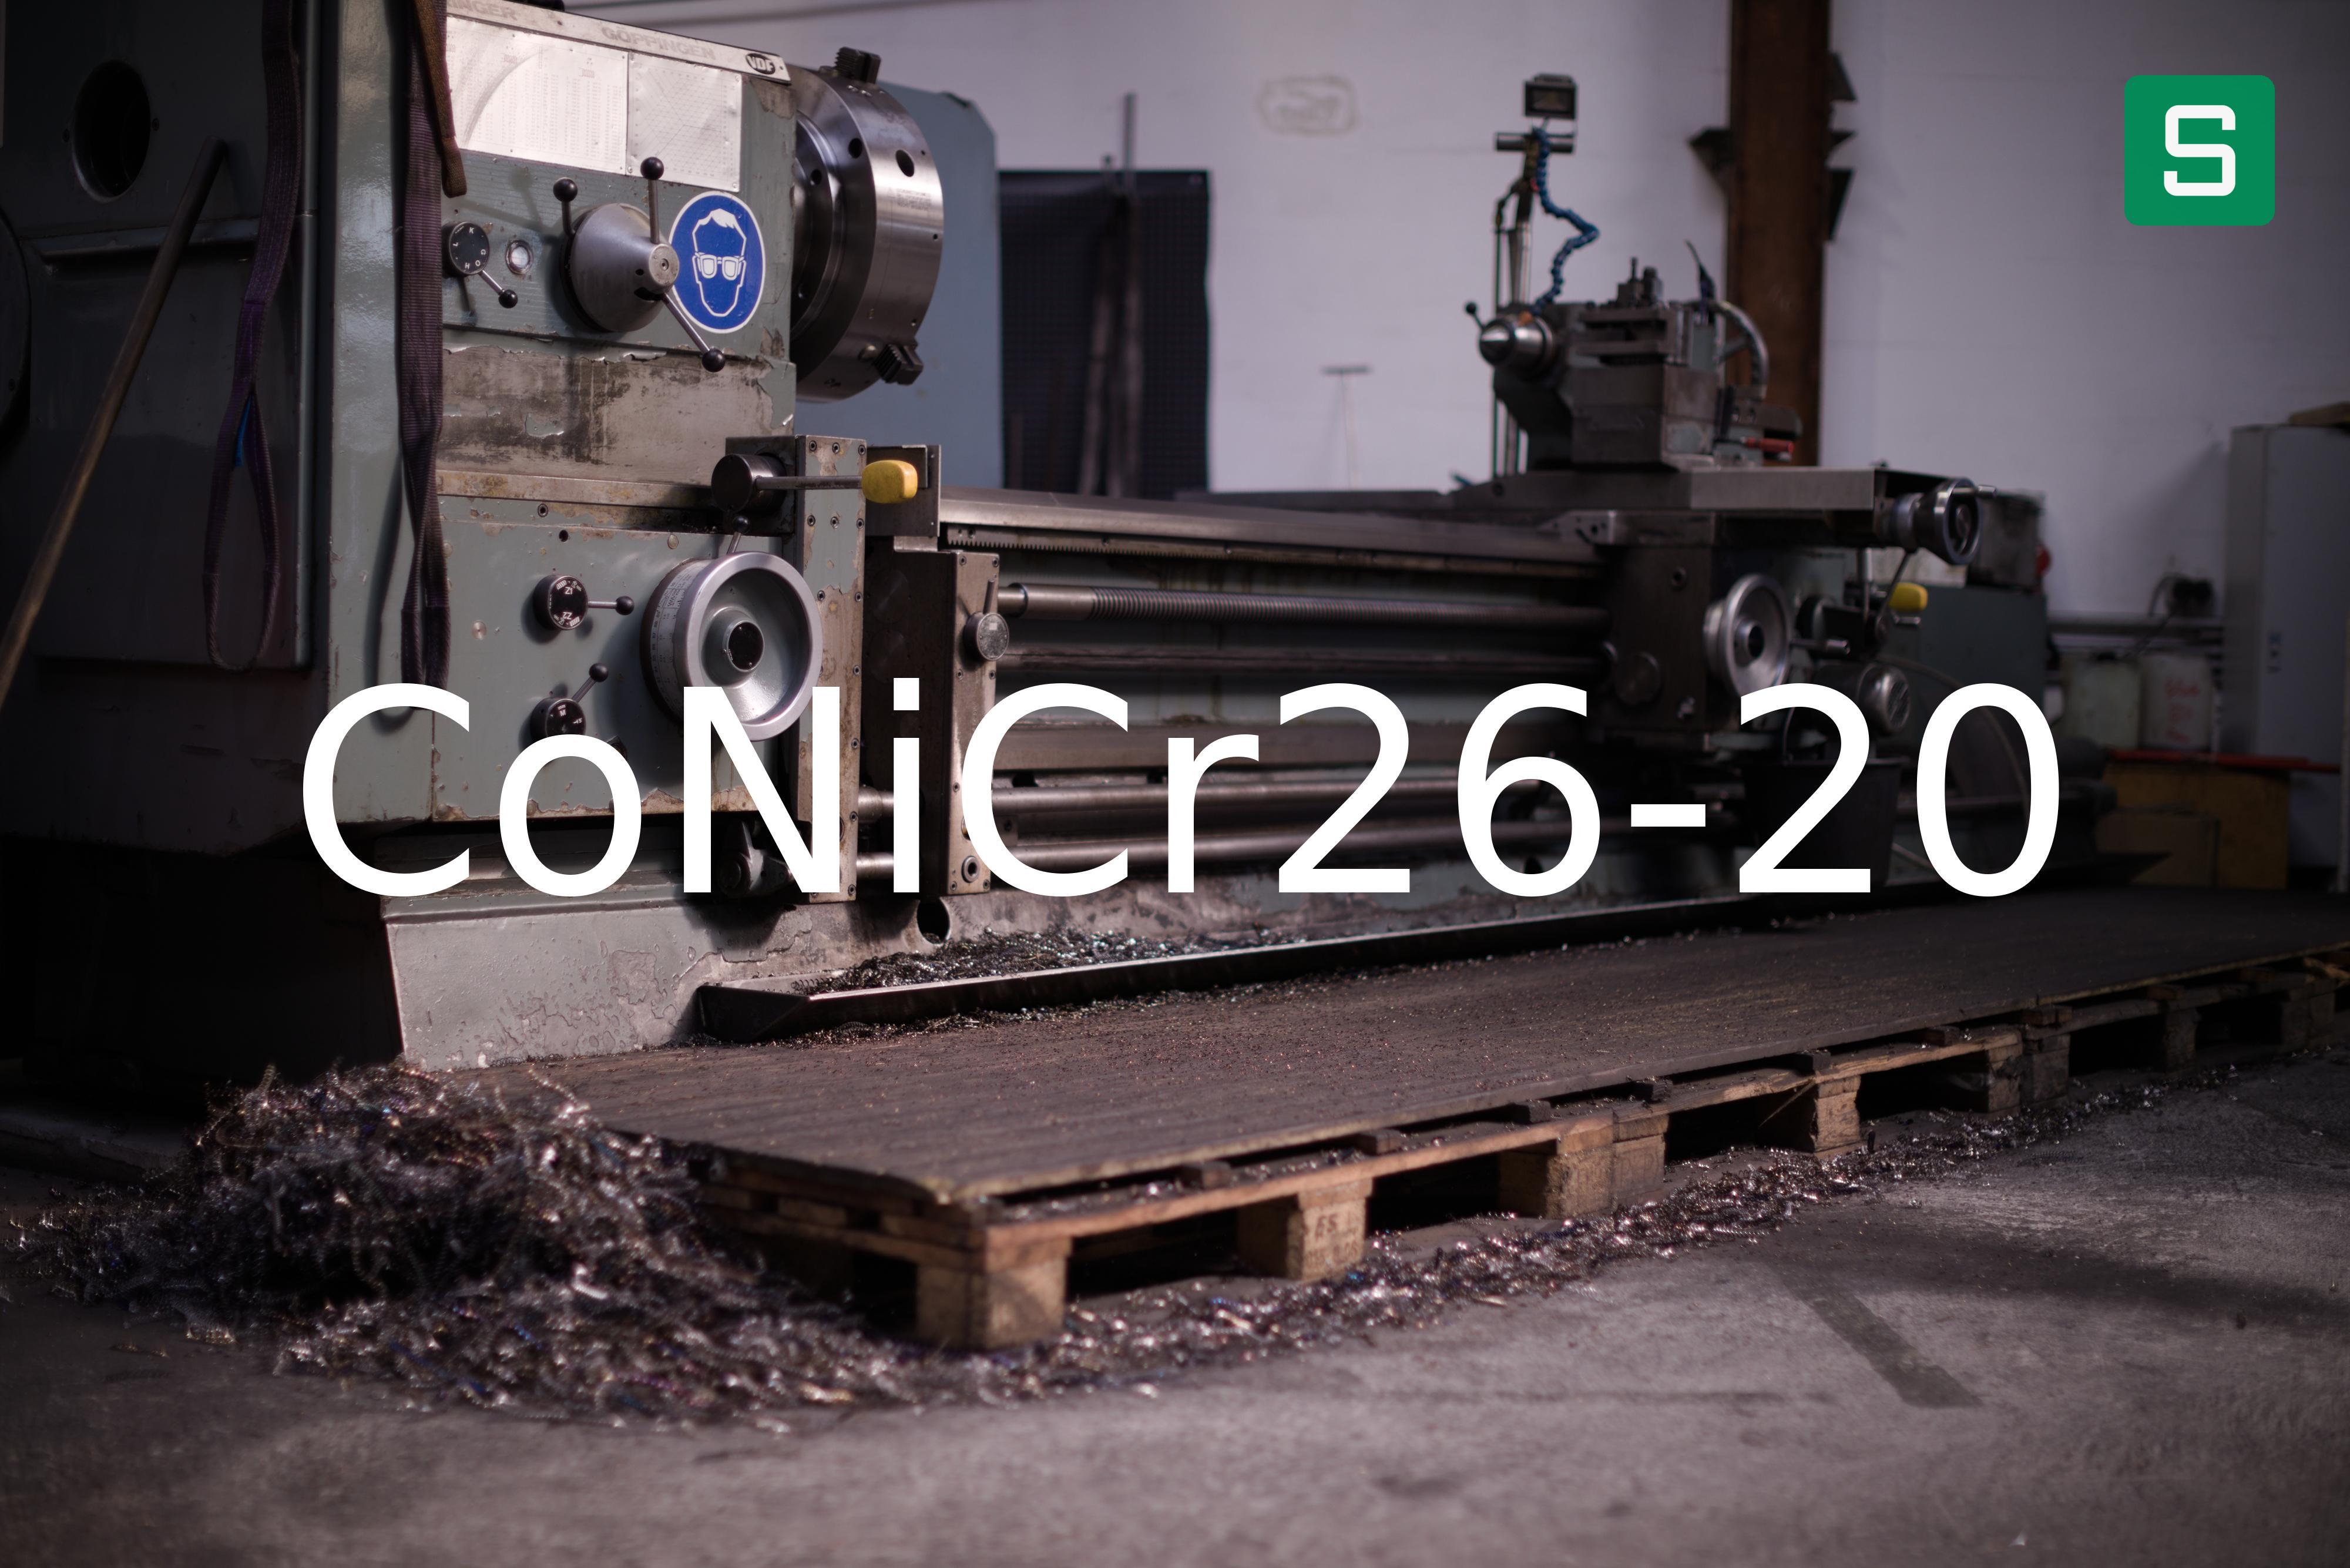 Steel Material: CoNiCr26-20